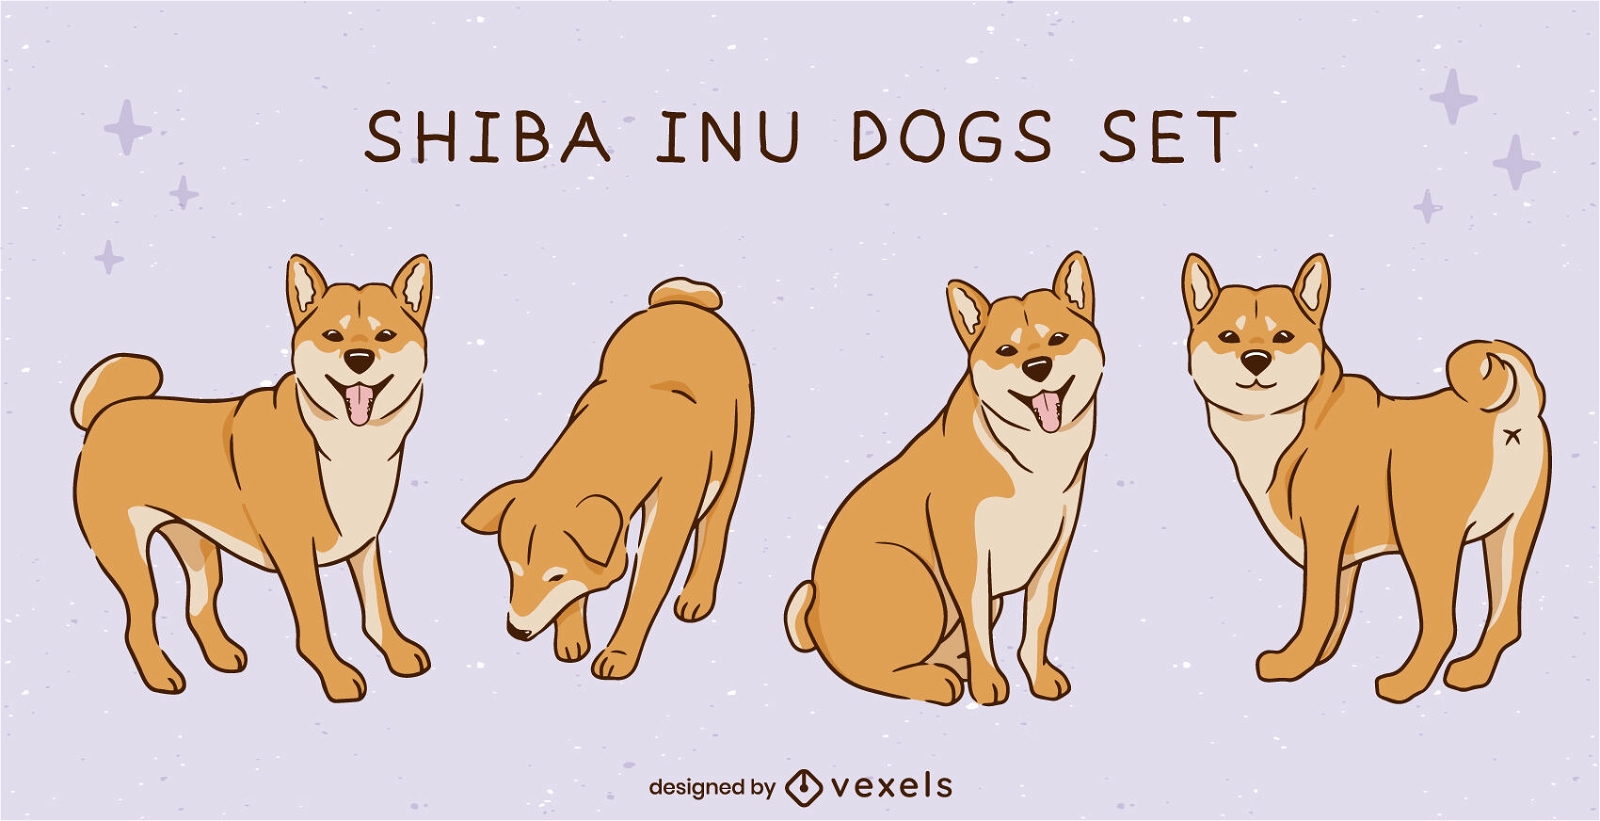 Shiba inu perro raza lindo animal conjunto